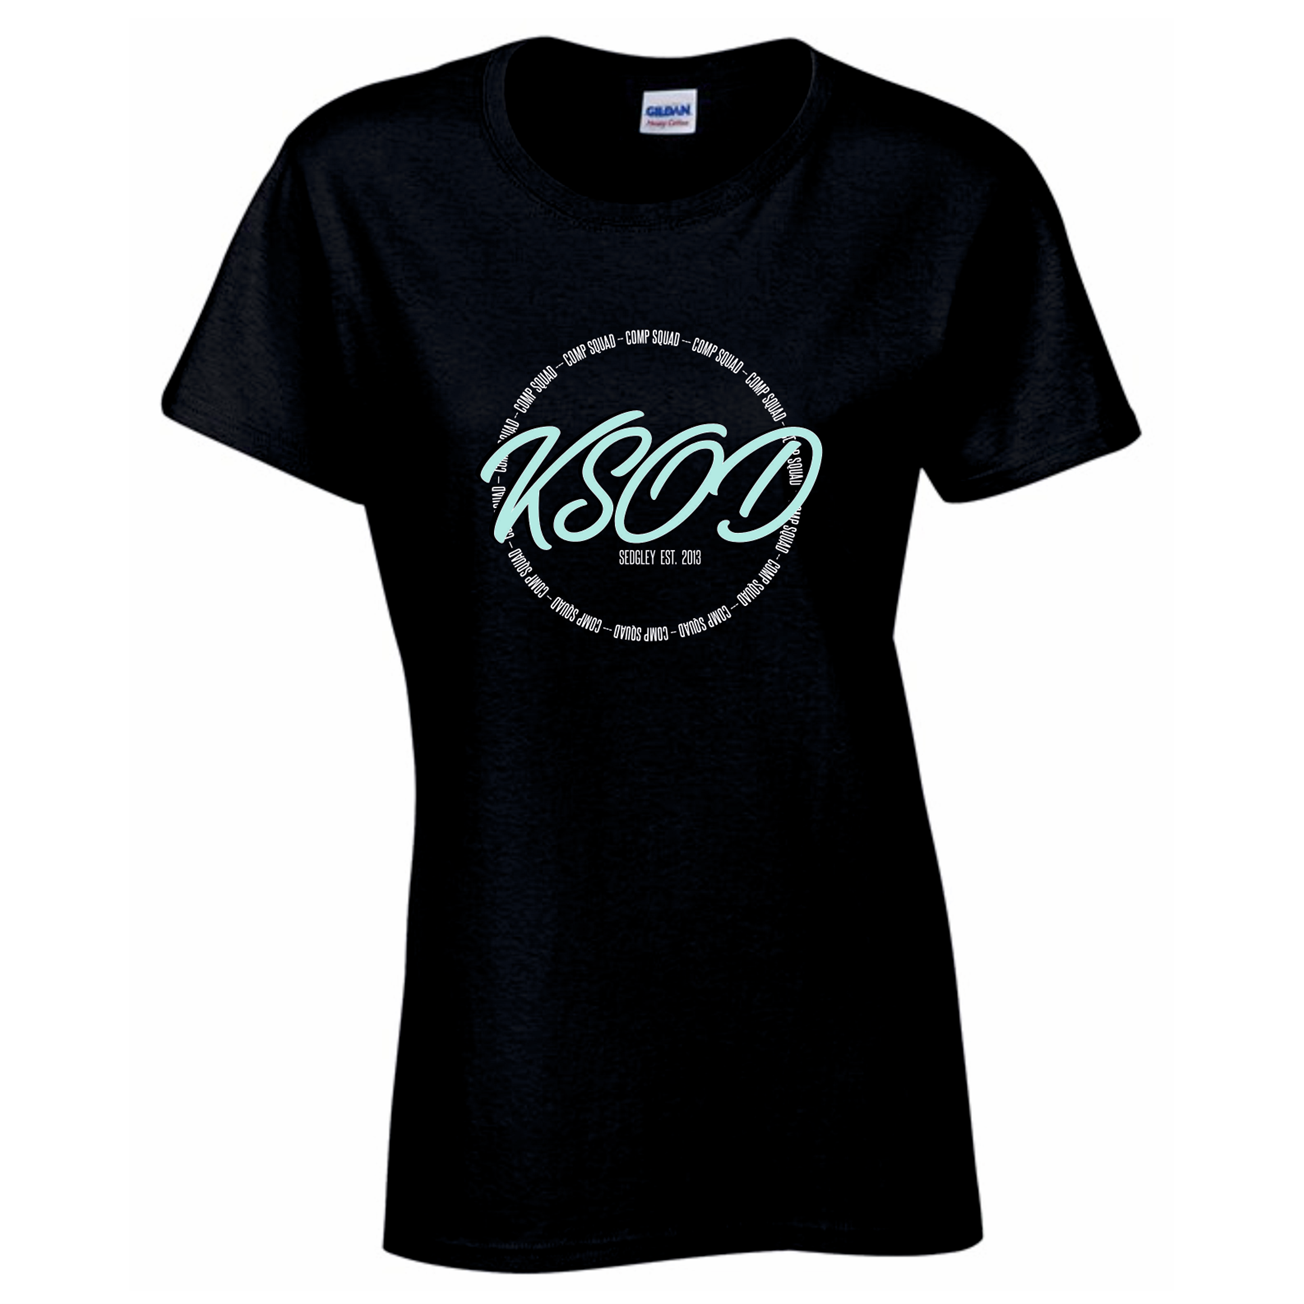 KSOD - Senior Comp Squad Training T-Shirt - Black